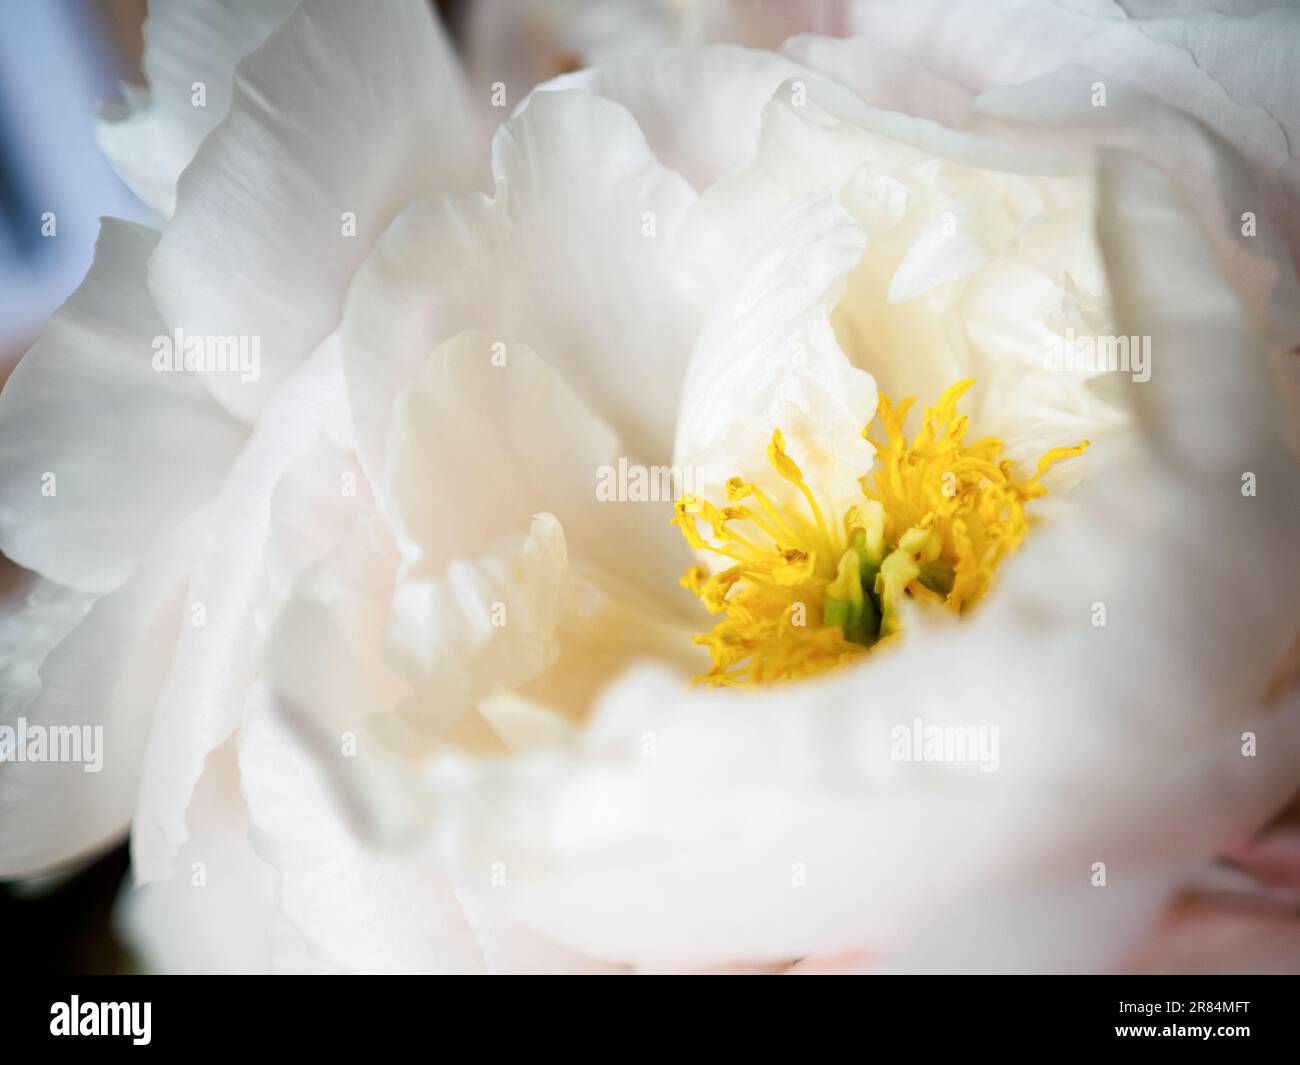 white tree peony, flowering plant, close up view Stock Photo